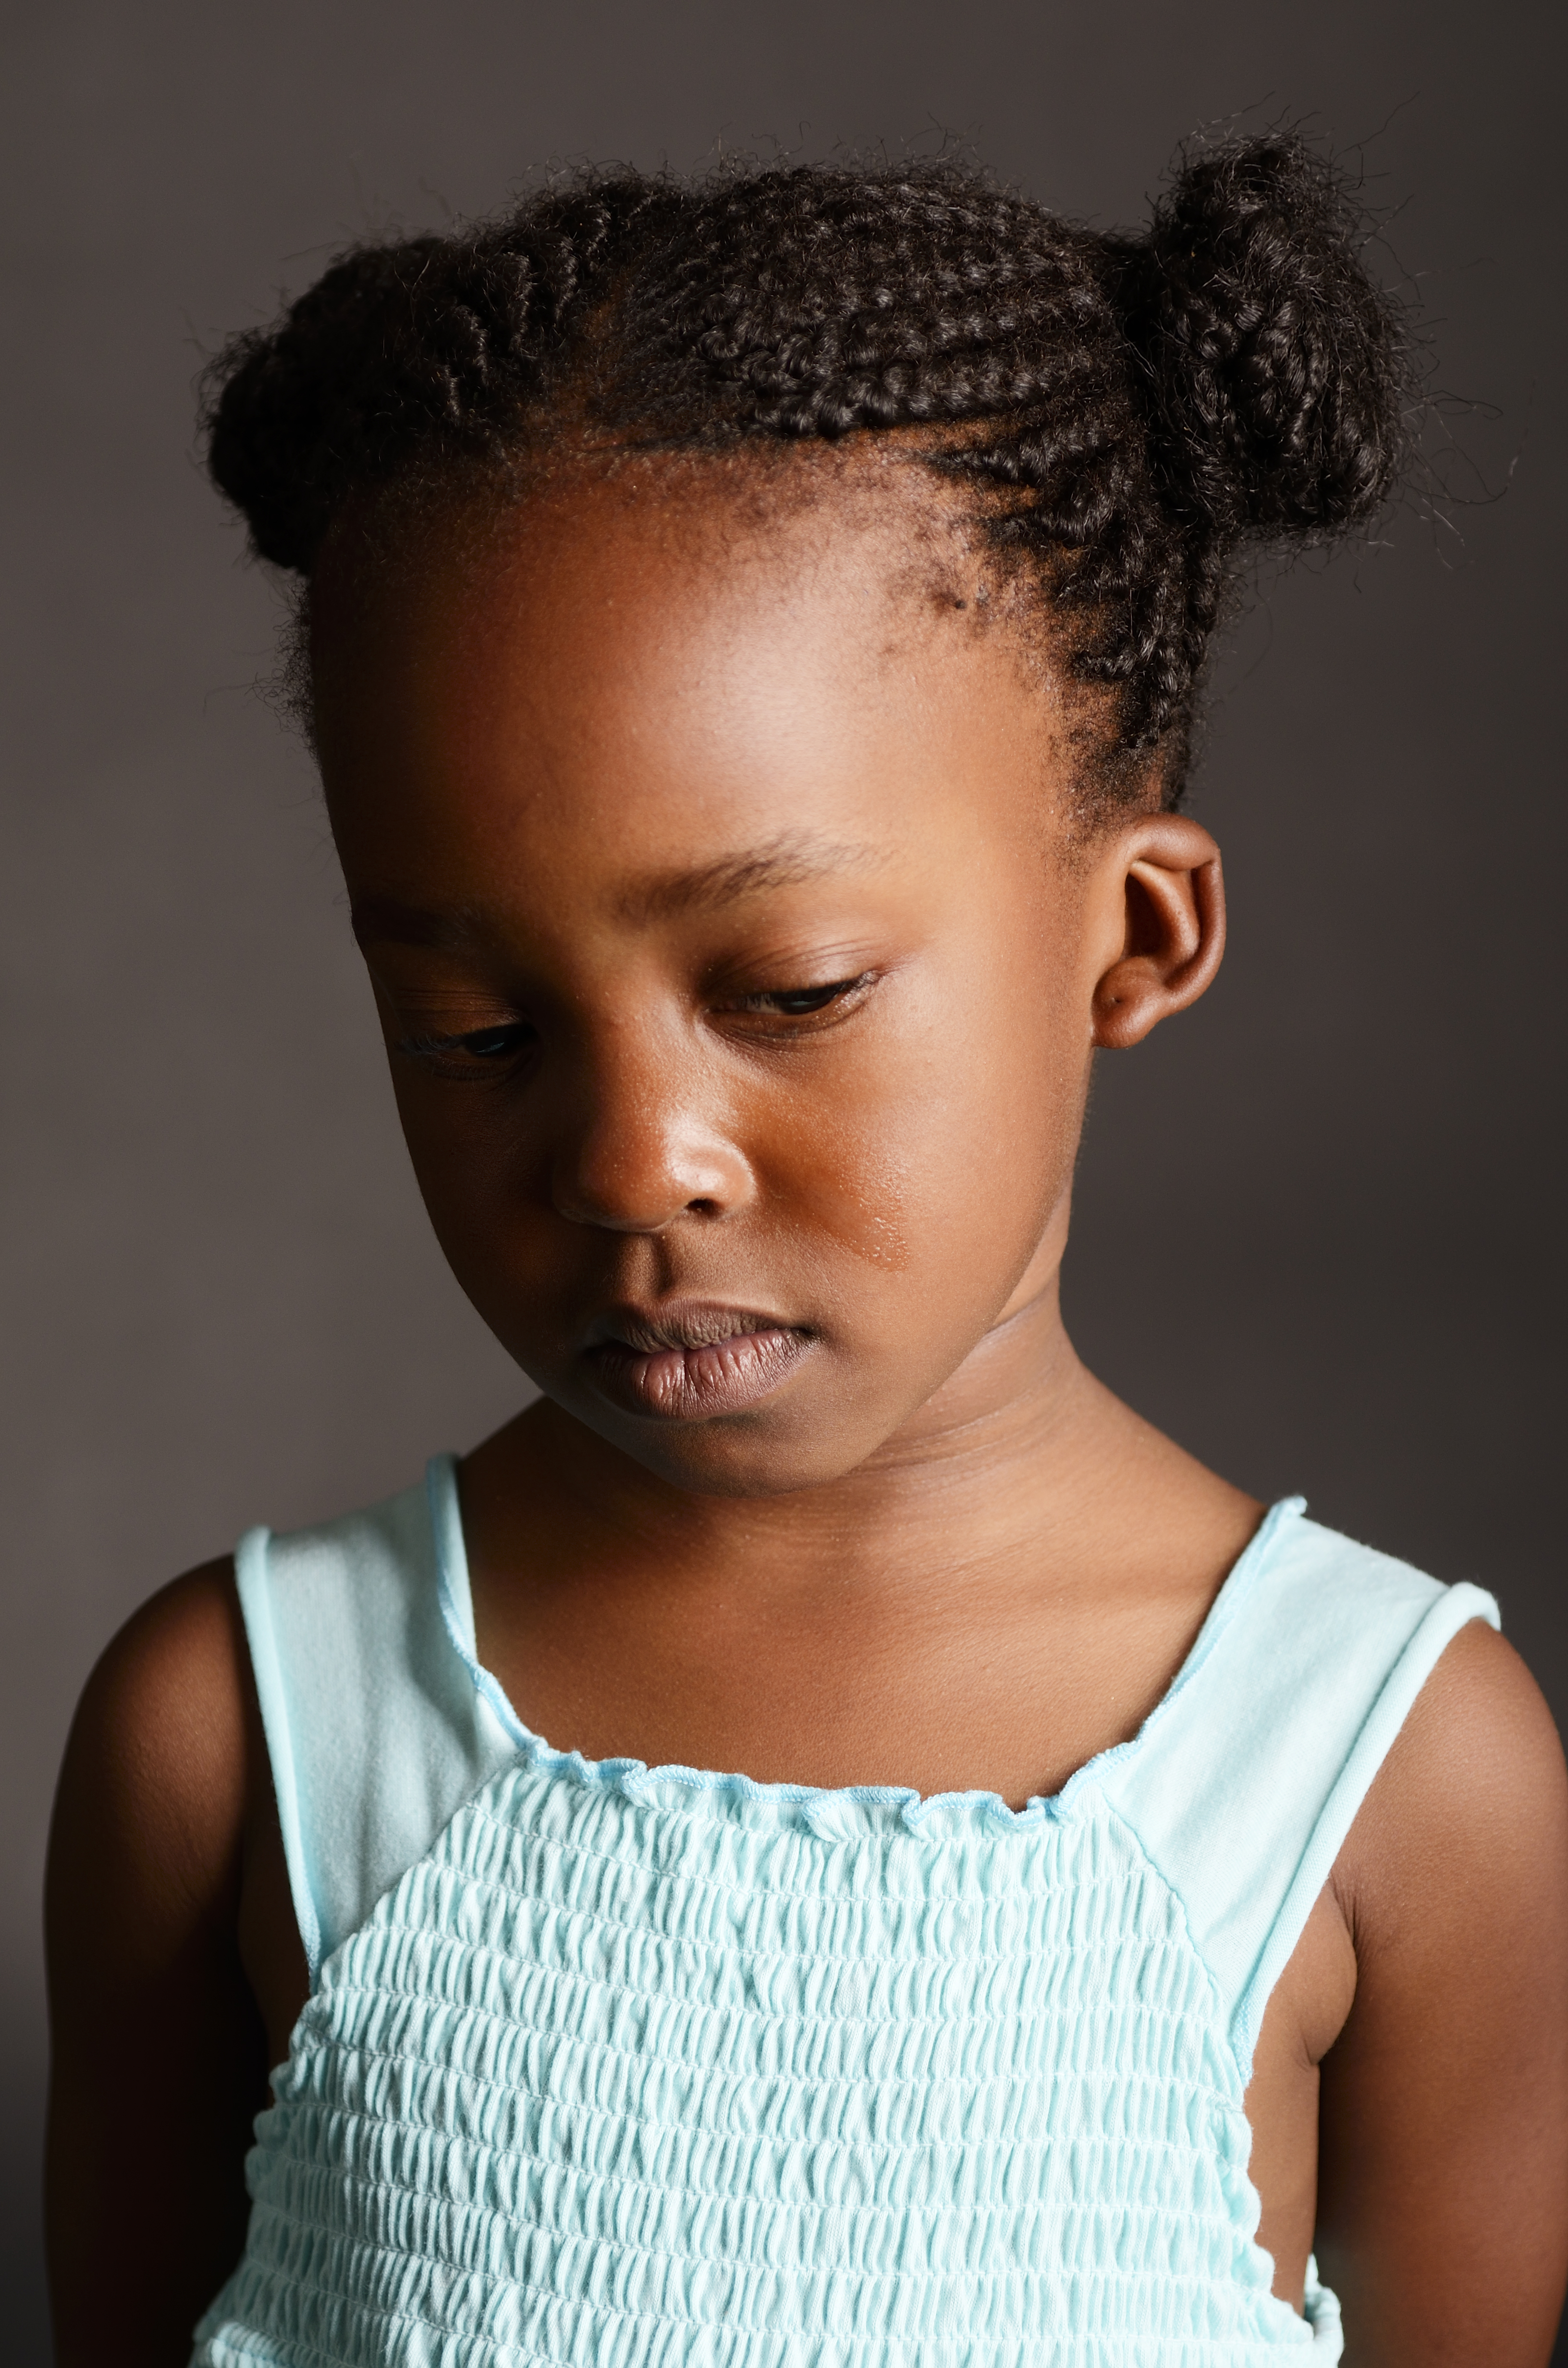 Niña africana triste | Fuente: Shutterstock